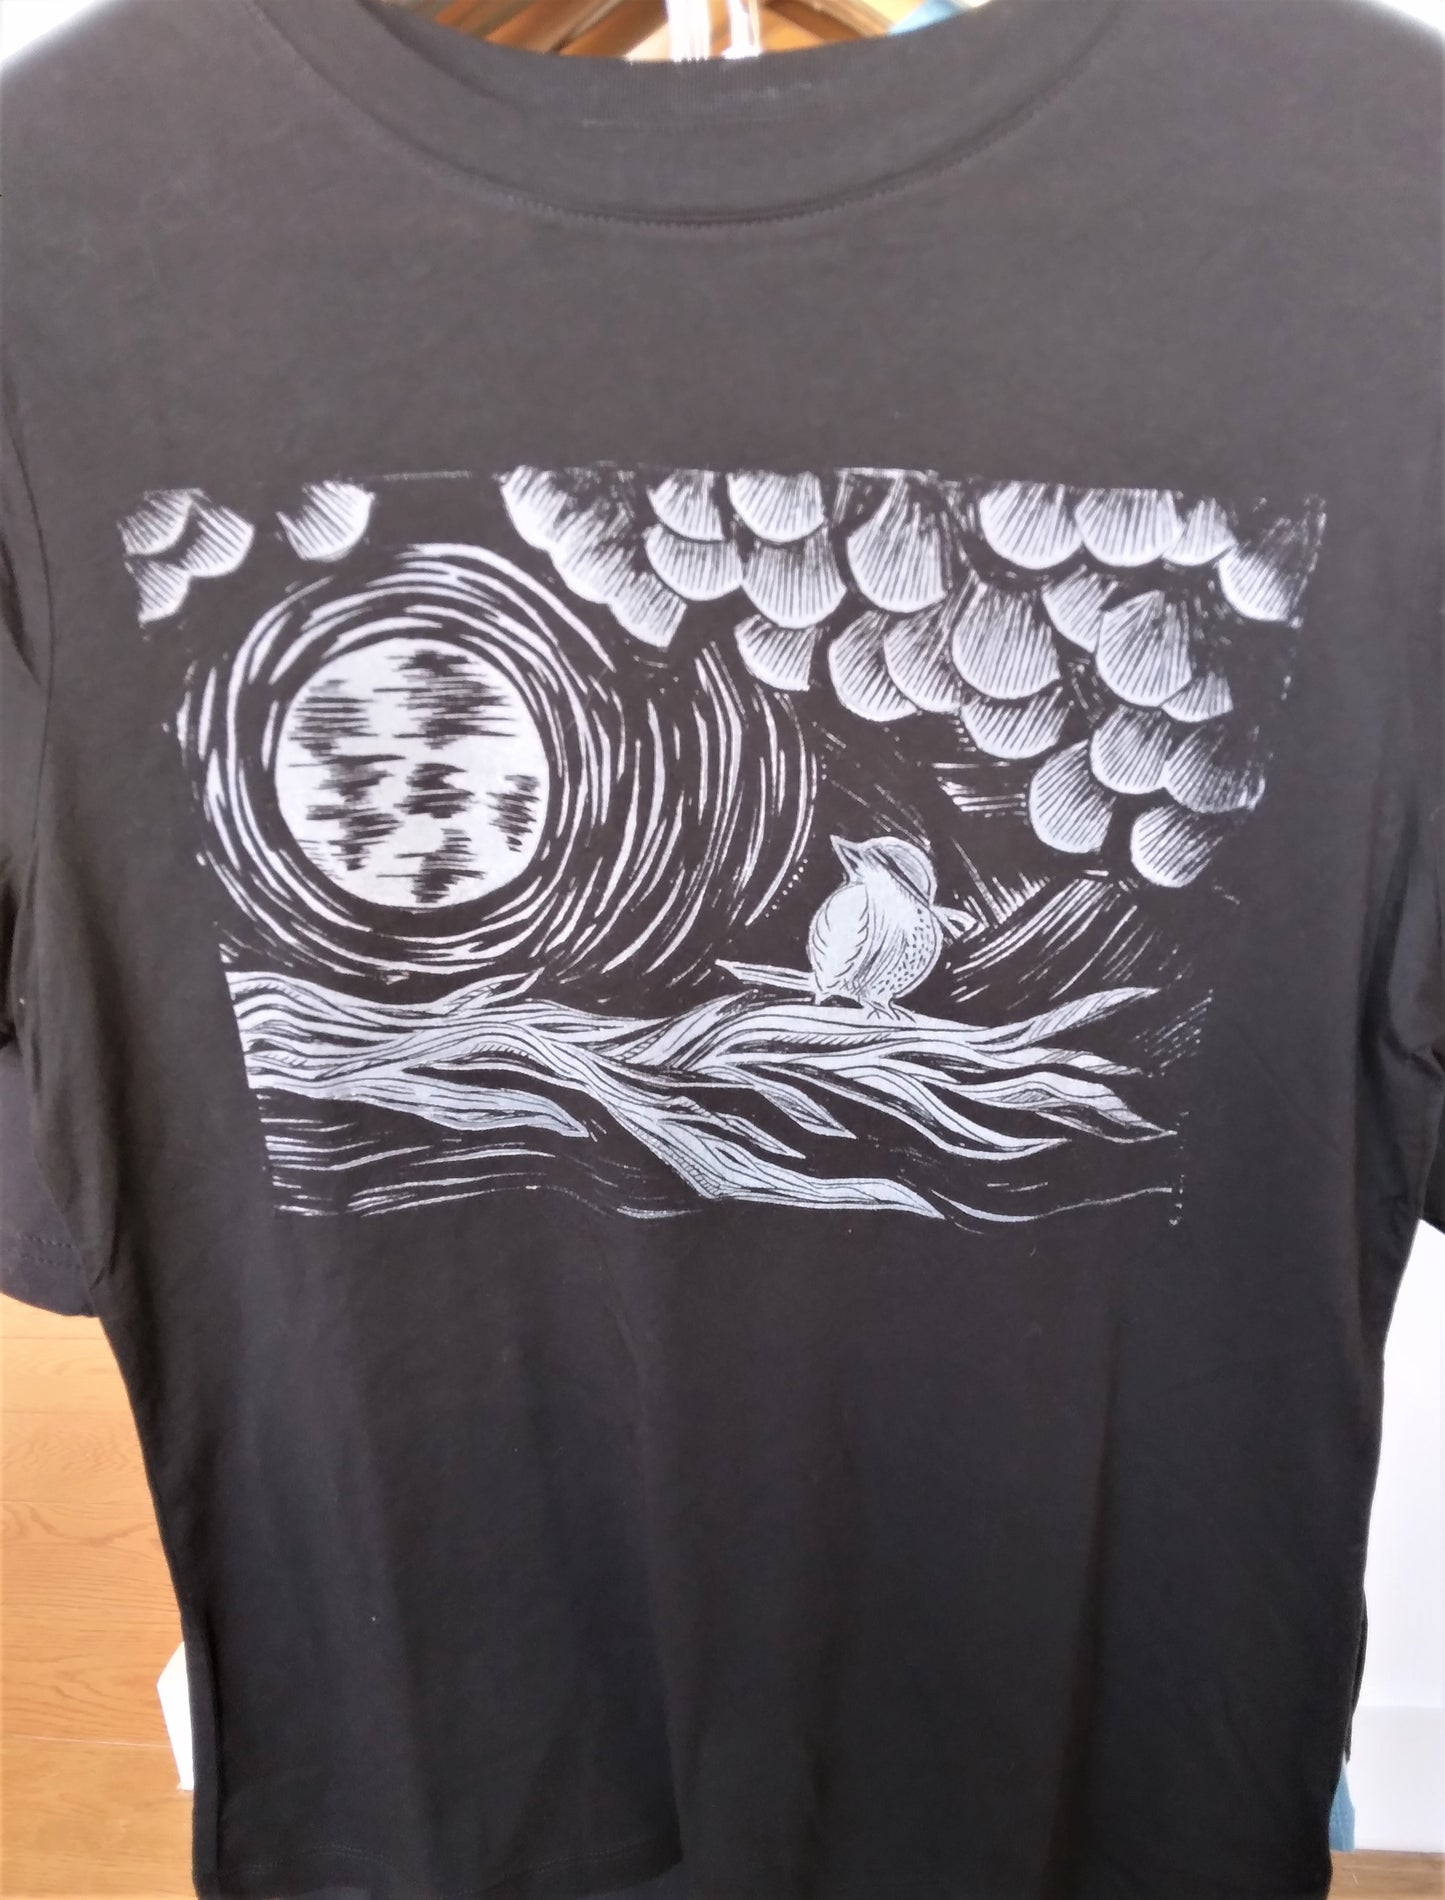 Jill McFarlane - "Night Vision" Block Print T-Shirt